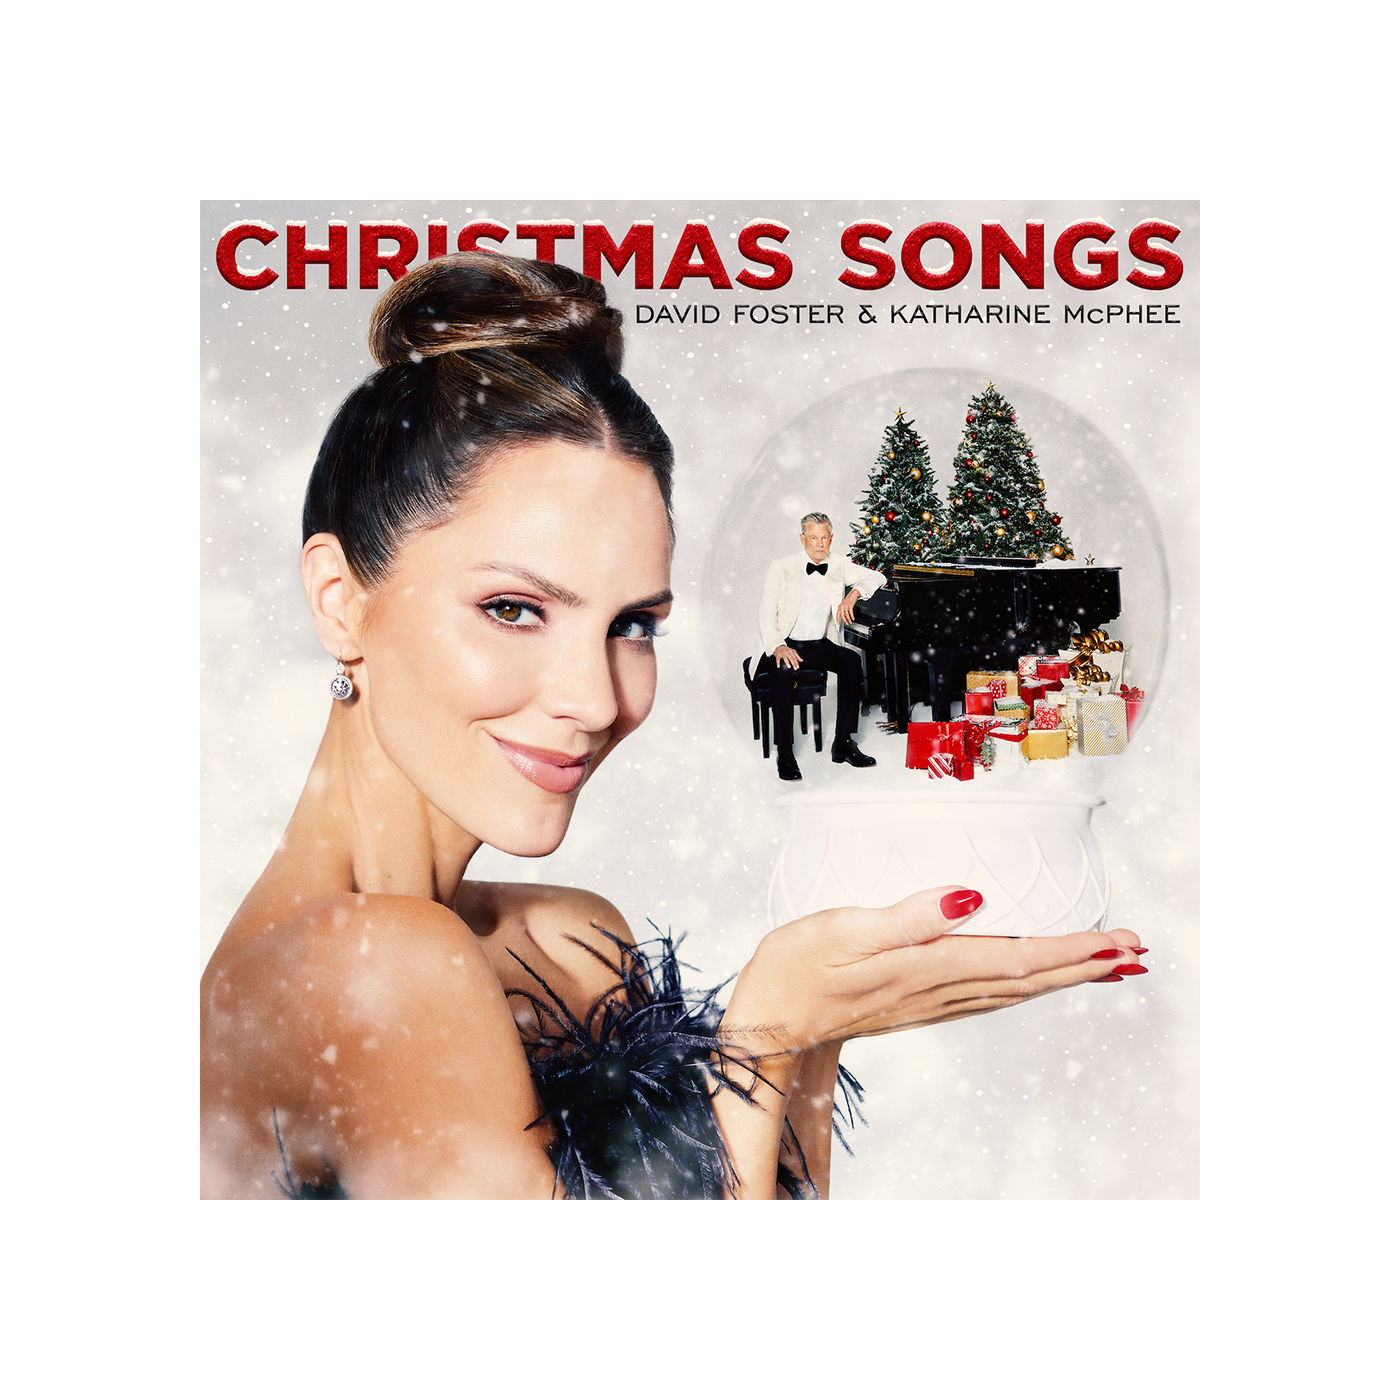 Christmas Songs Digital Album